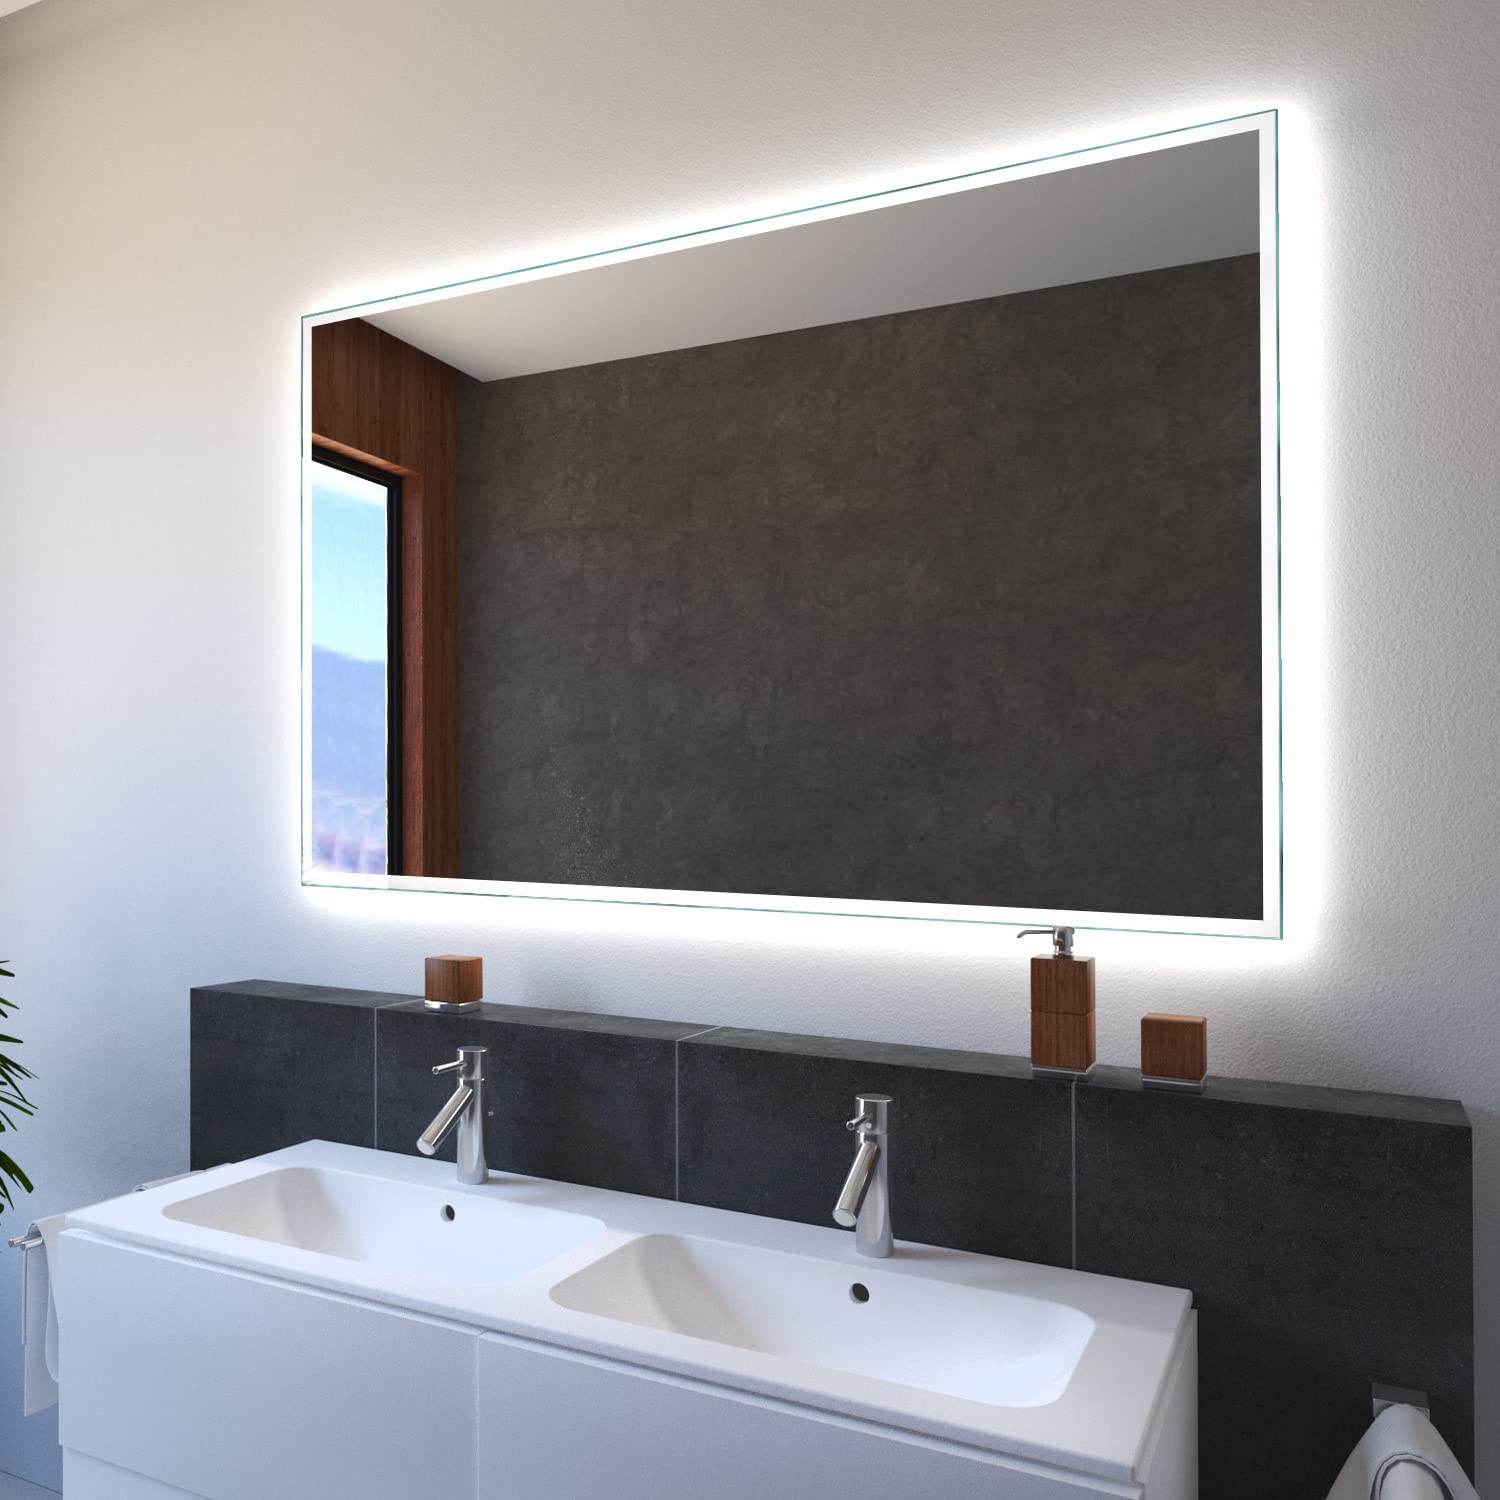 SARAR Wandspiegel mit schmaler rundum LED-Beleuchtung 90x120cm Made in Germany Designo MA4111 Badspiegel Spiegel mit Beleuchtung Badezimmerspiegel nach-auf Maß